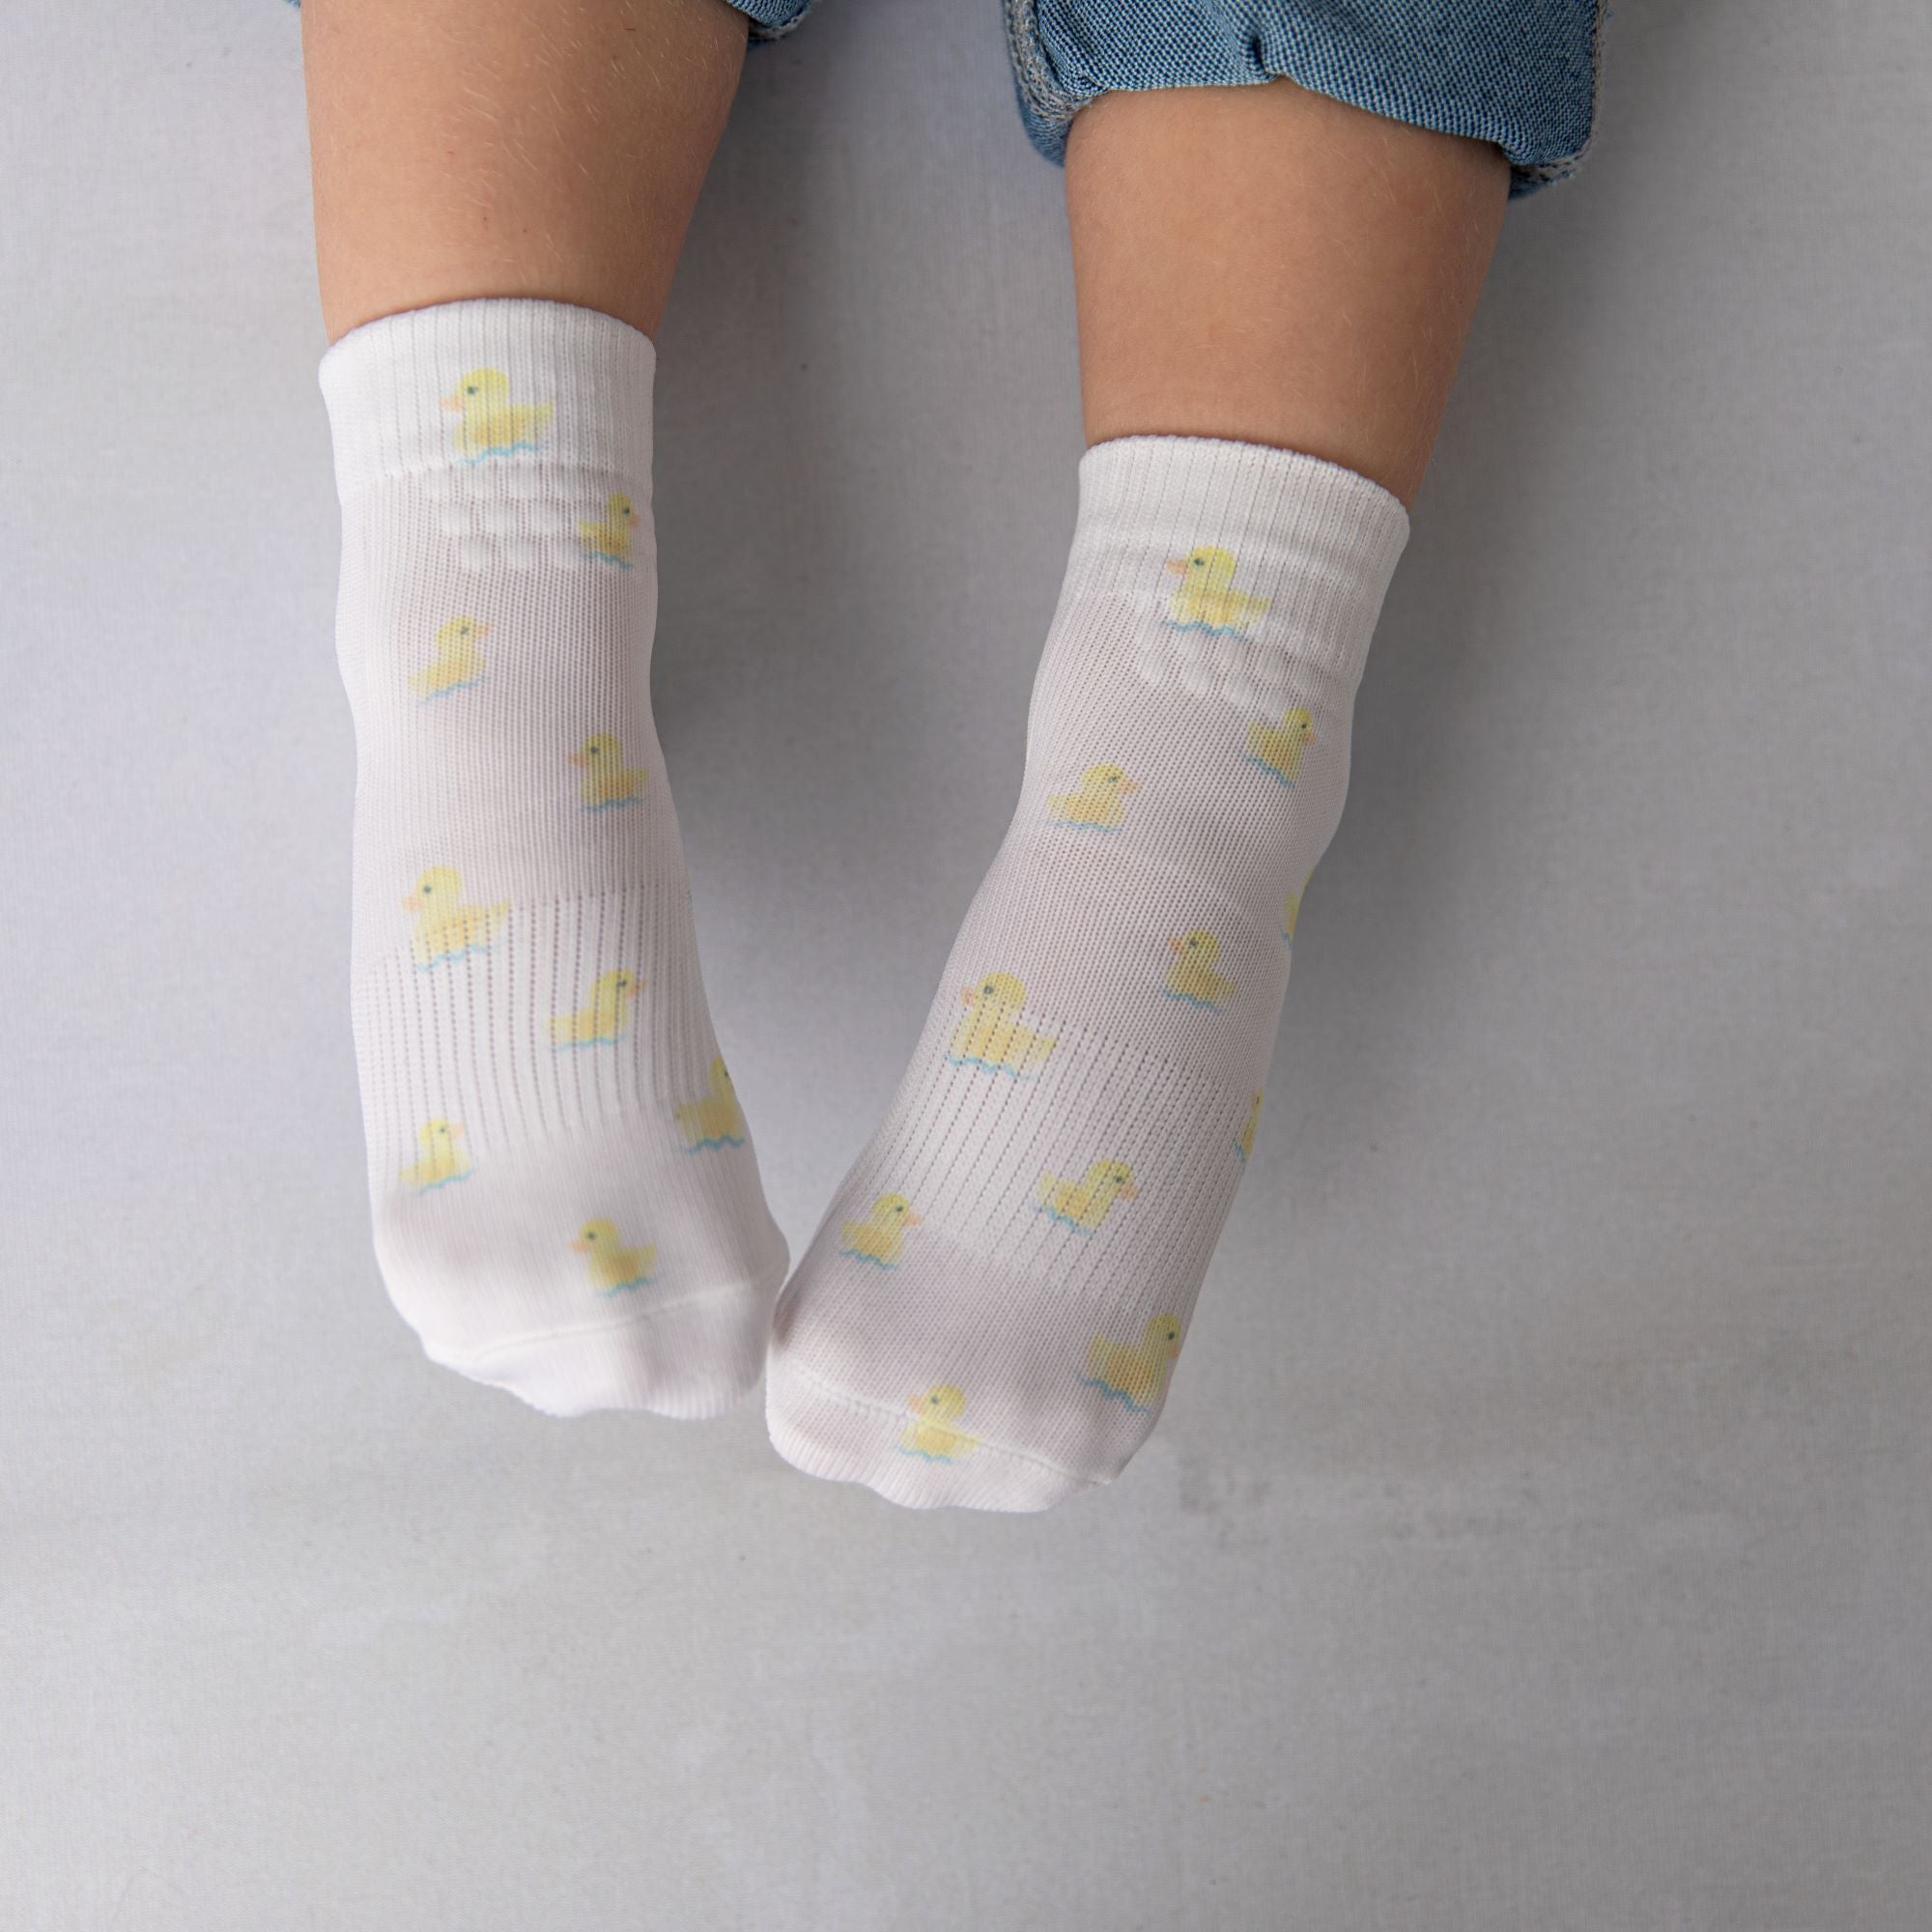 Squid Socks® - Finally, Baby Socks That Stay On!